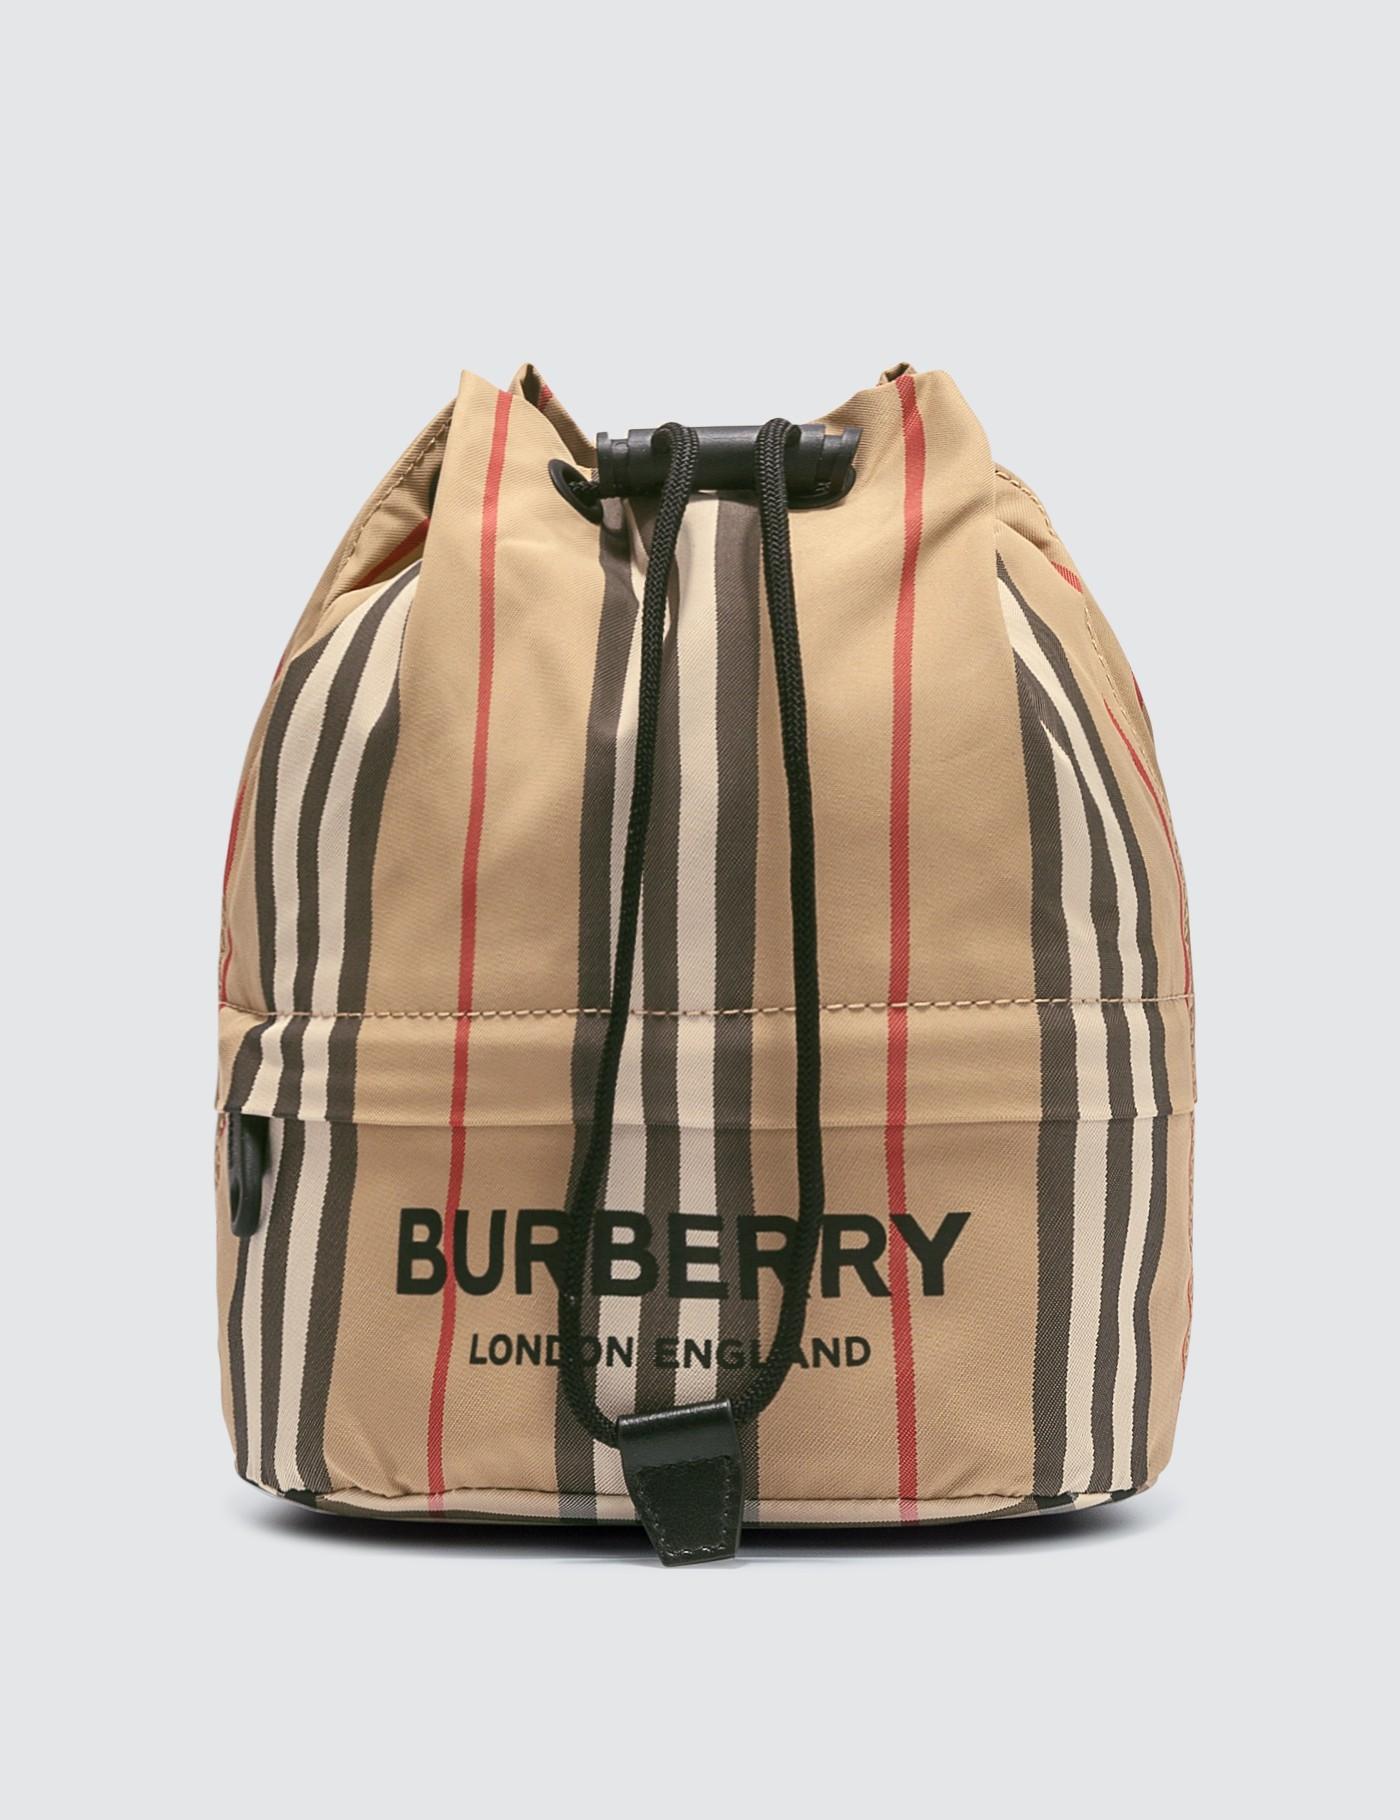 burberry nylon pouch